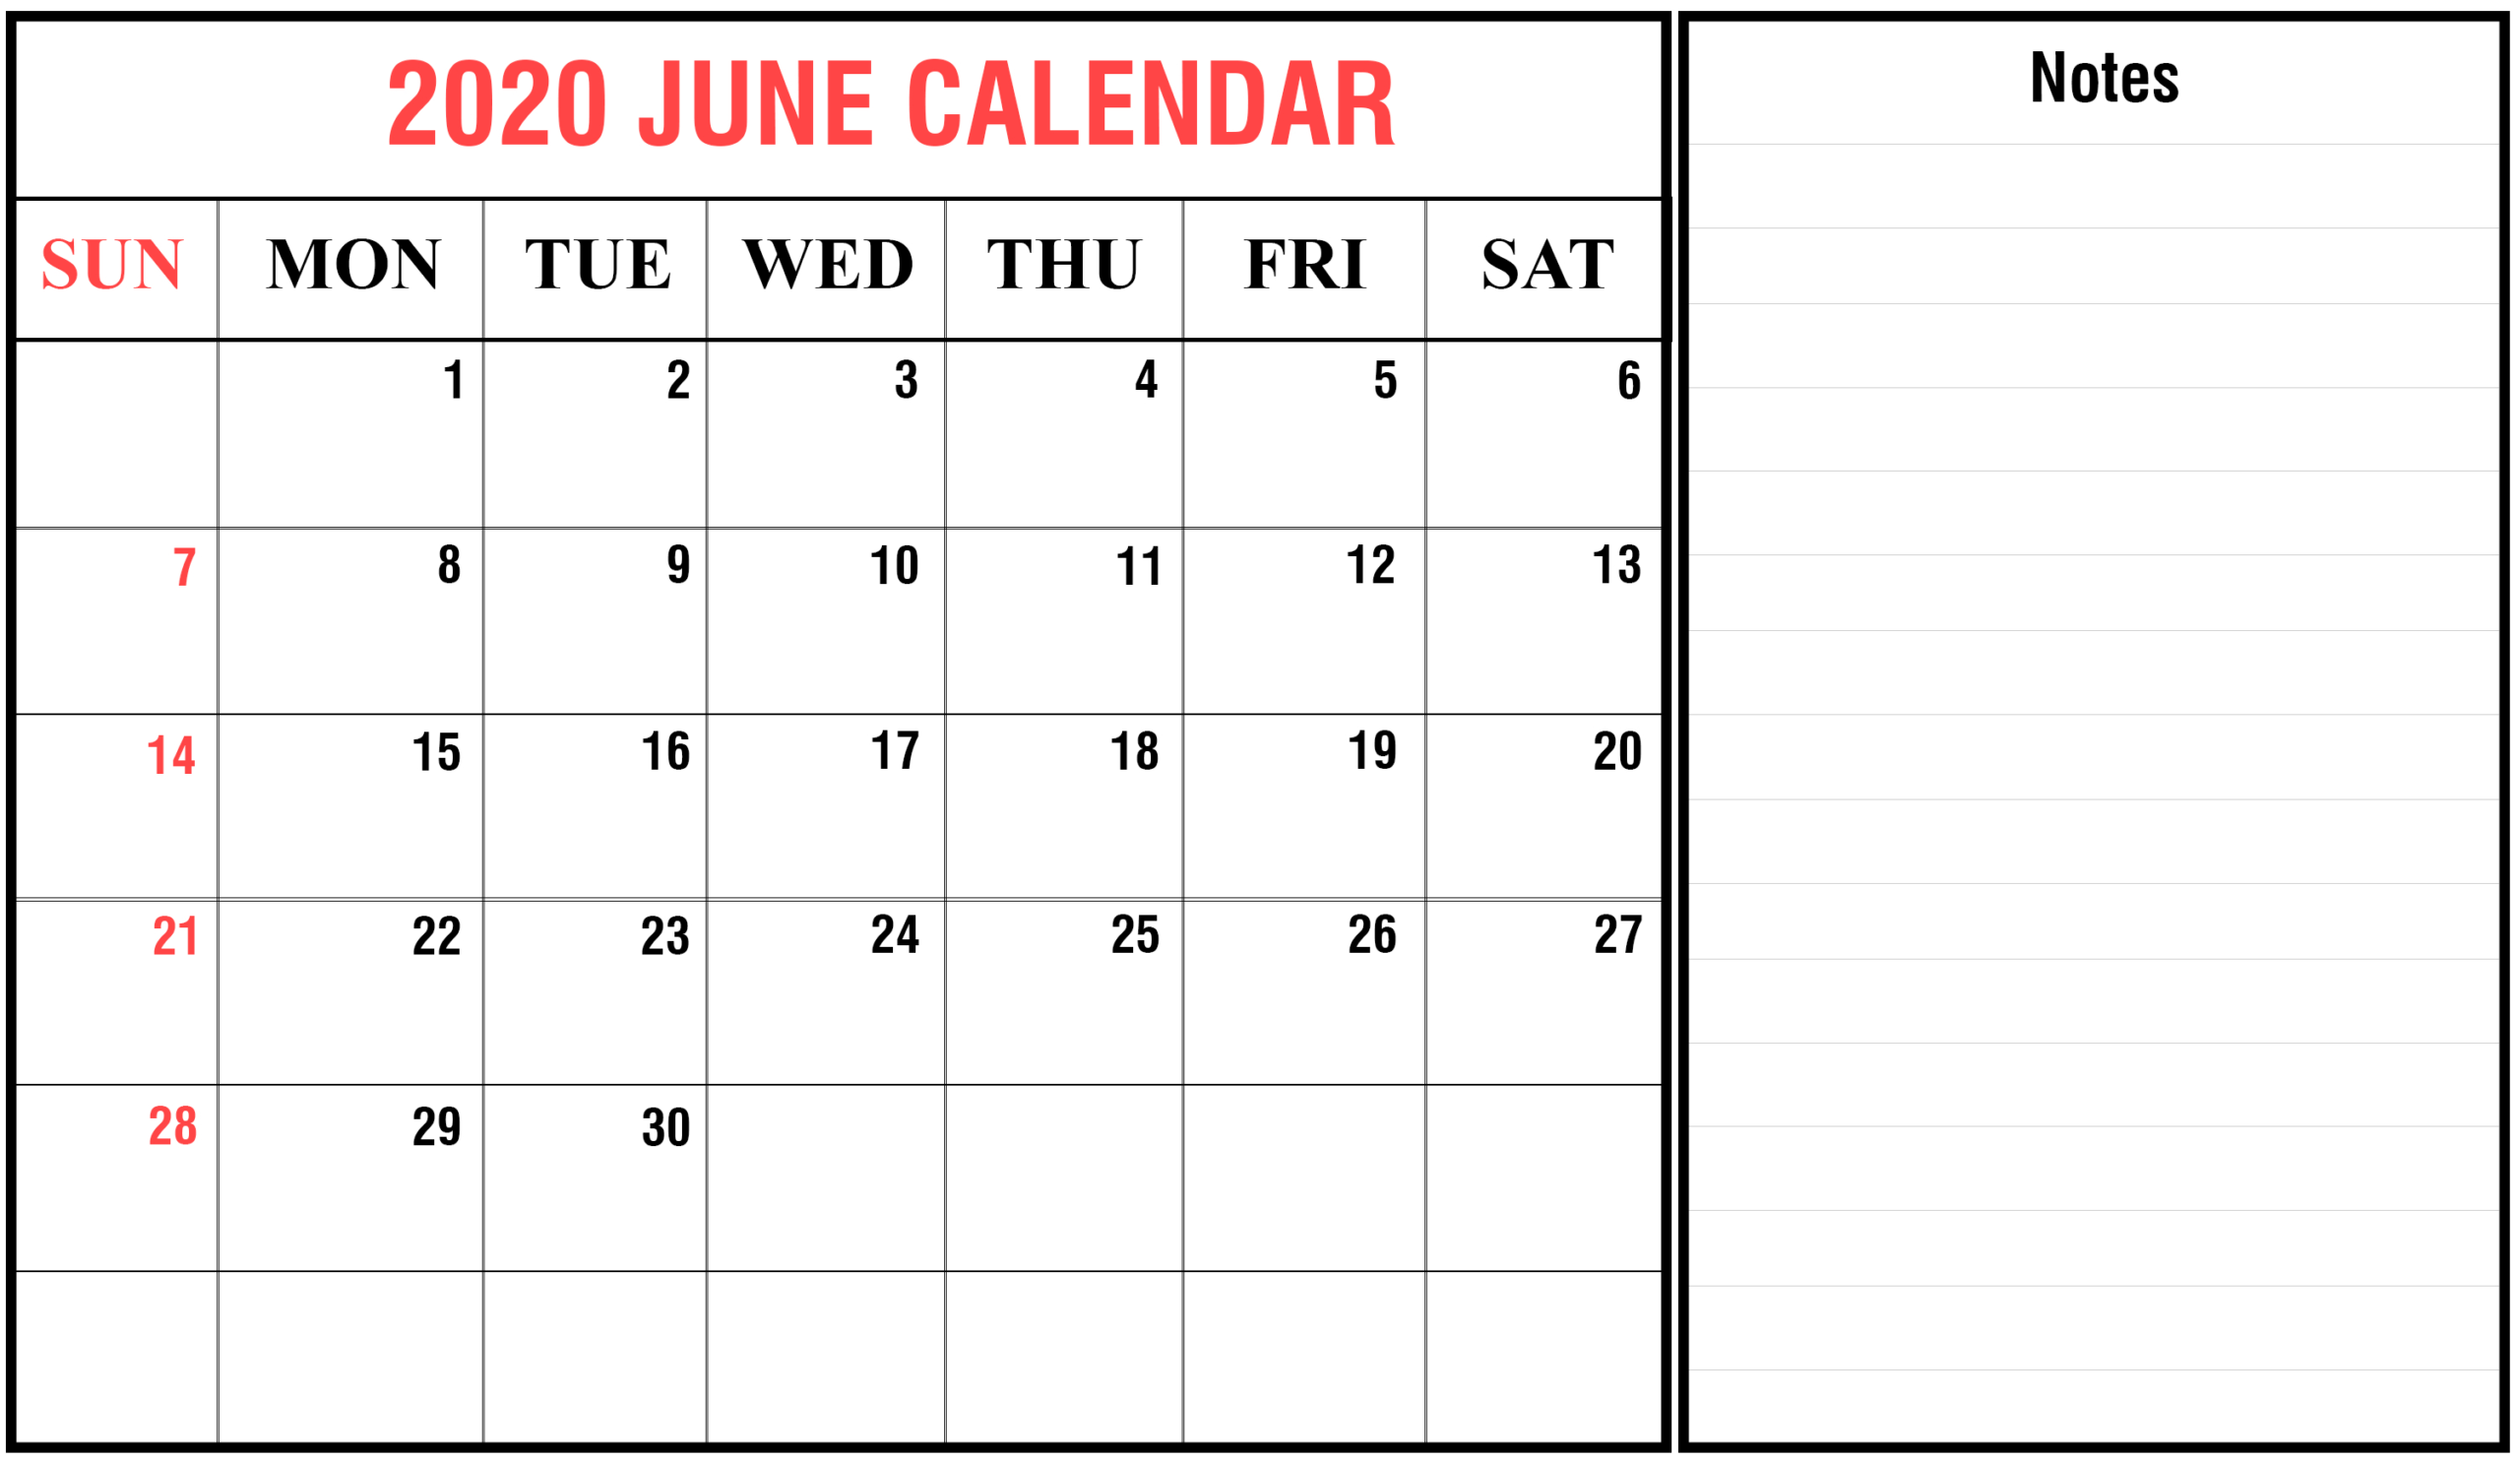 2020 Calendar Hk Excel | Calendar For Planning regarding 2021 Hong Kong Calendar Excel